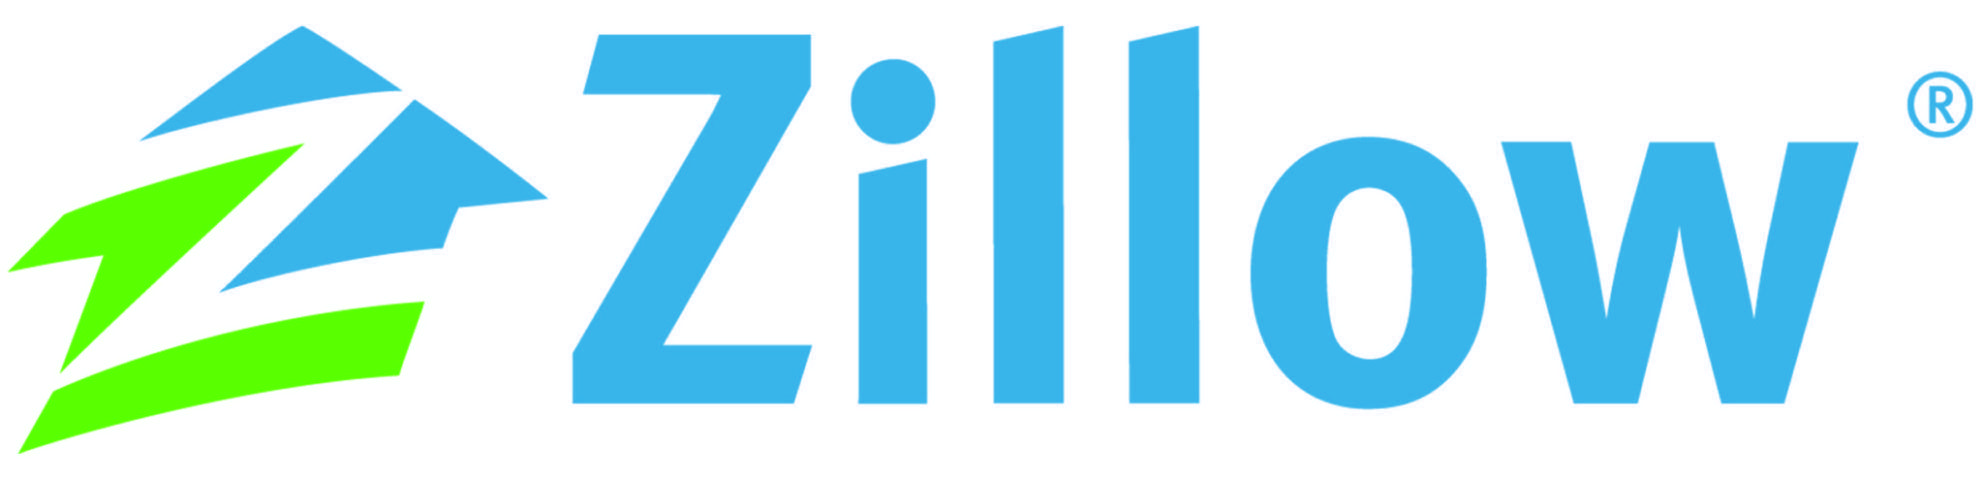 StreetEasy Logo - Zillow set to acquire StreetEasy for $50 million